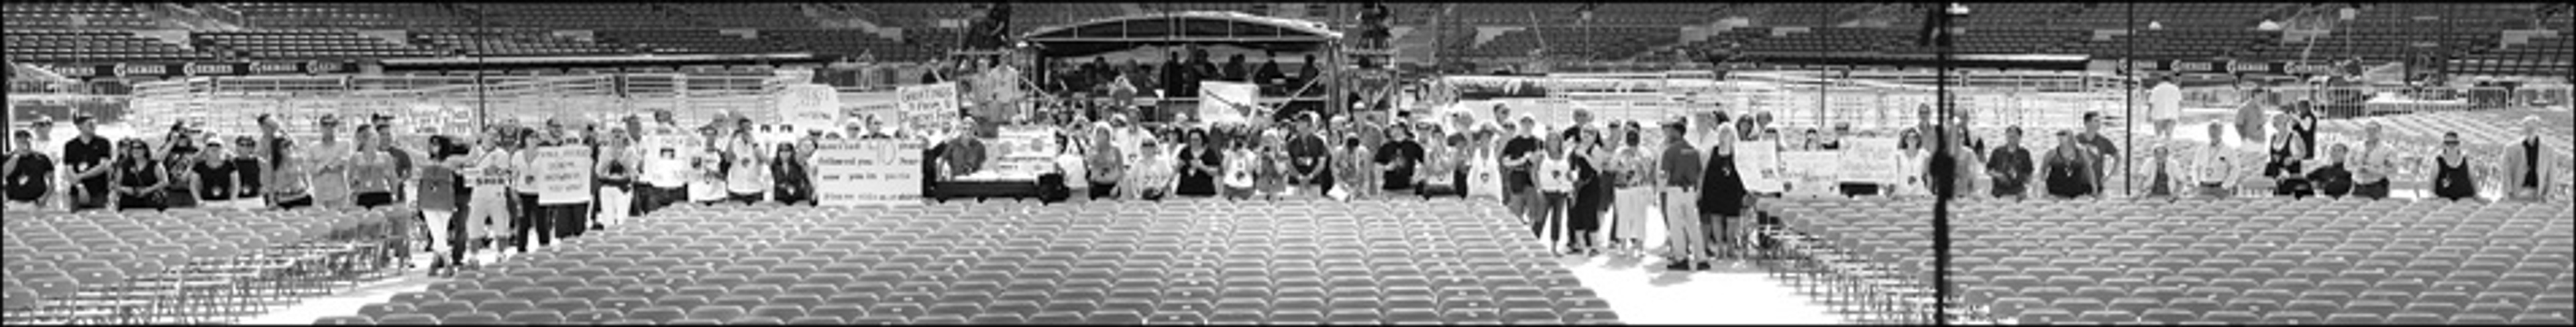 Soundcheck crowd at Yankee Stadium, NYC, 15-Jul-11